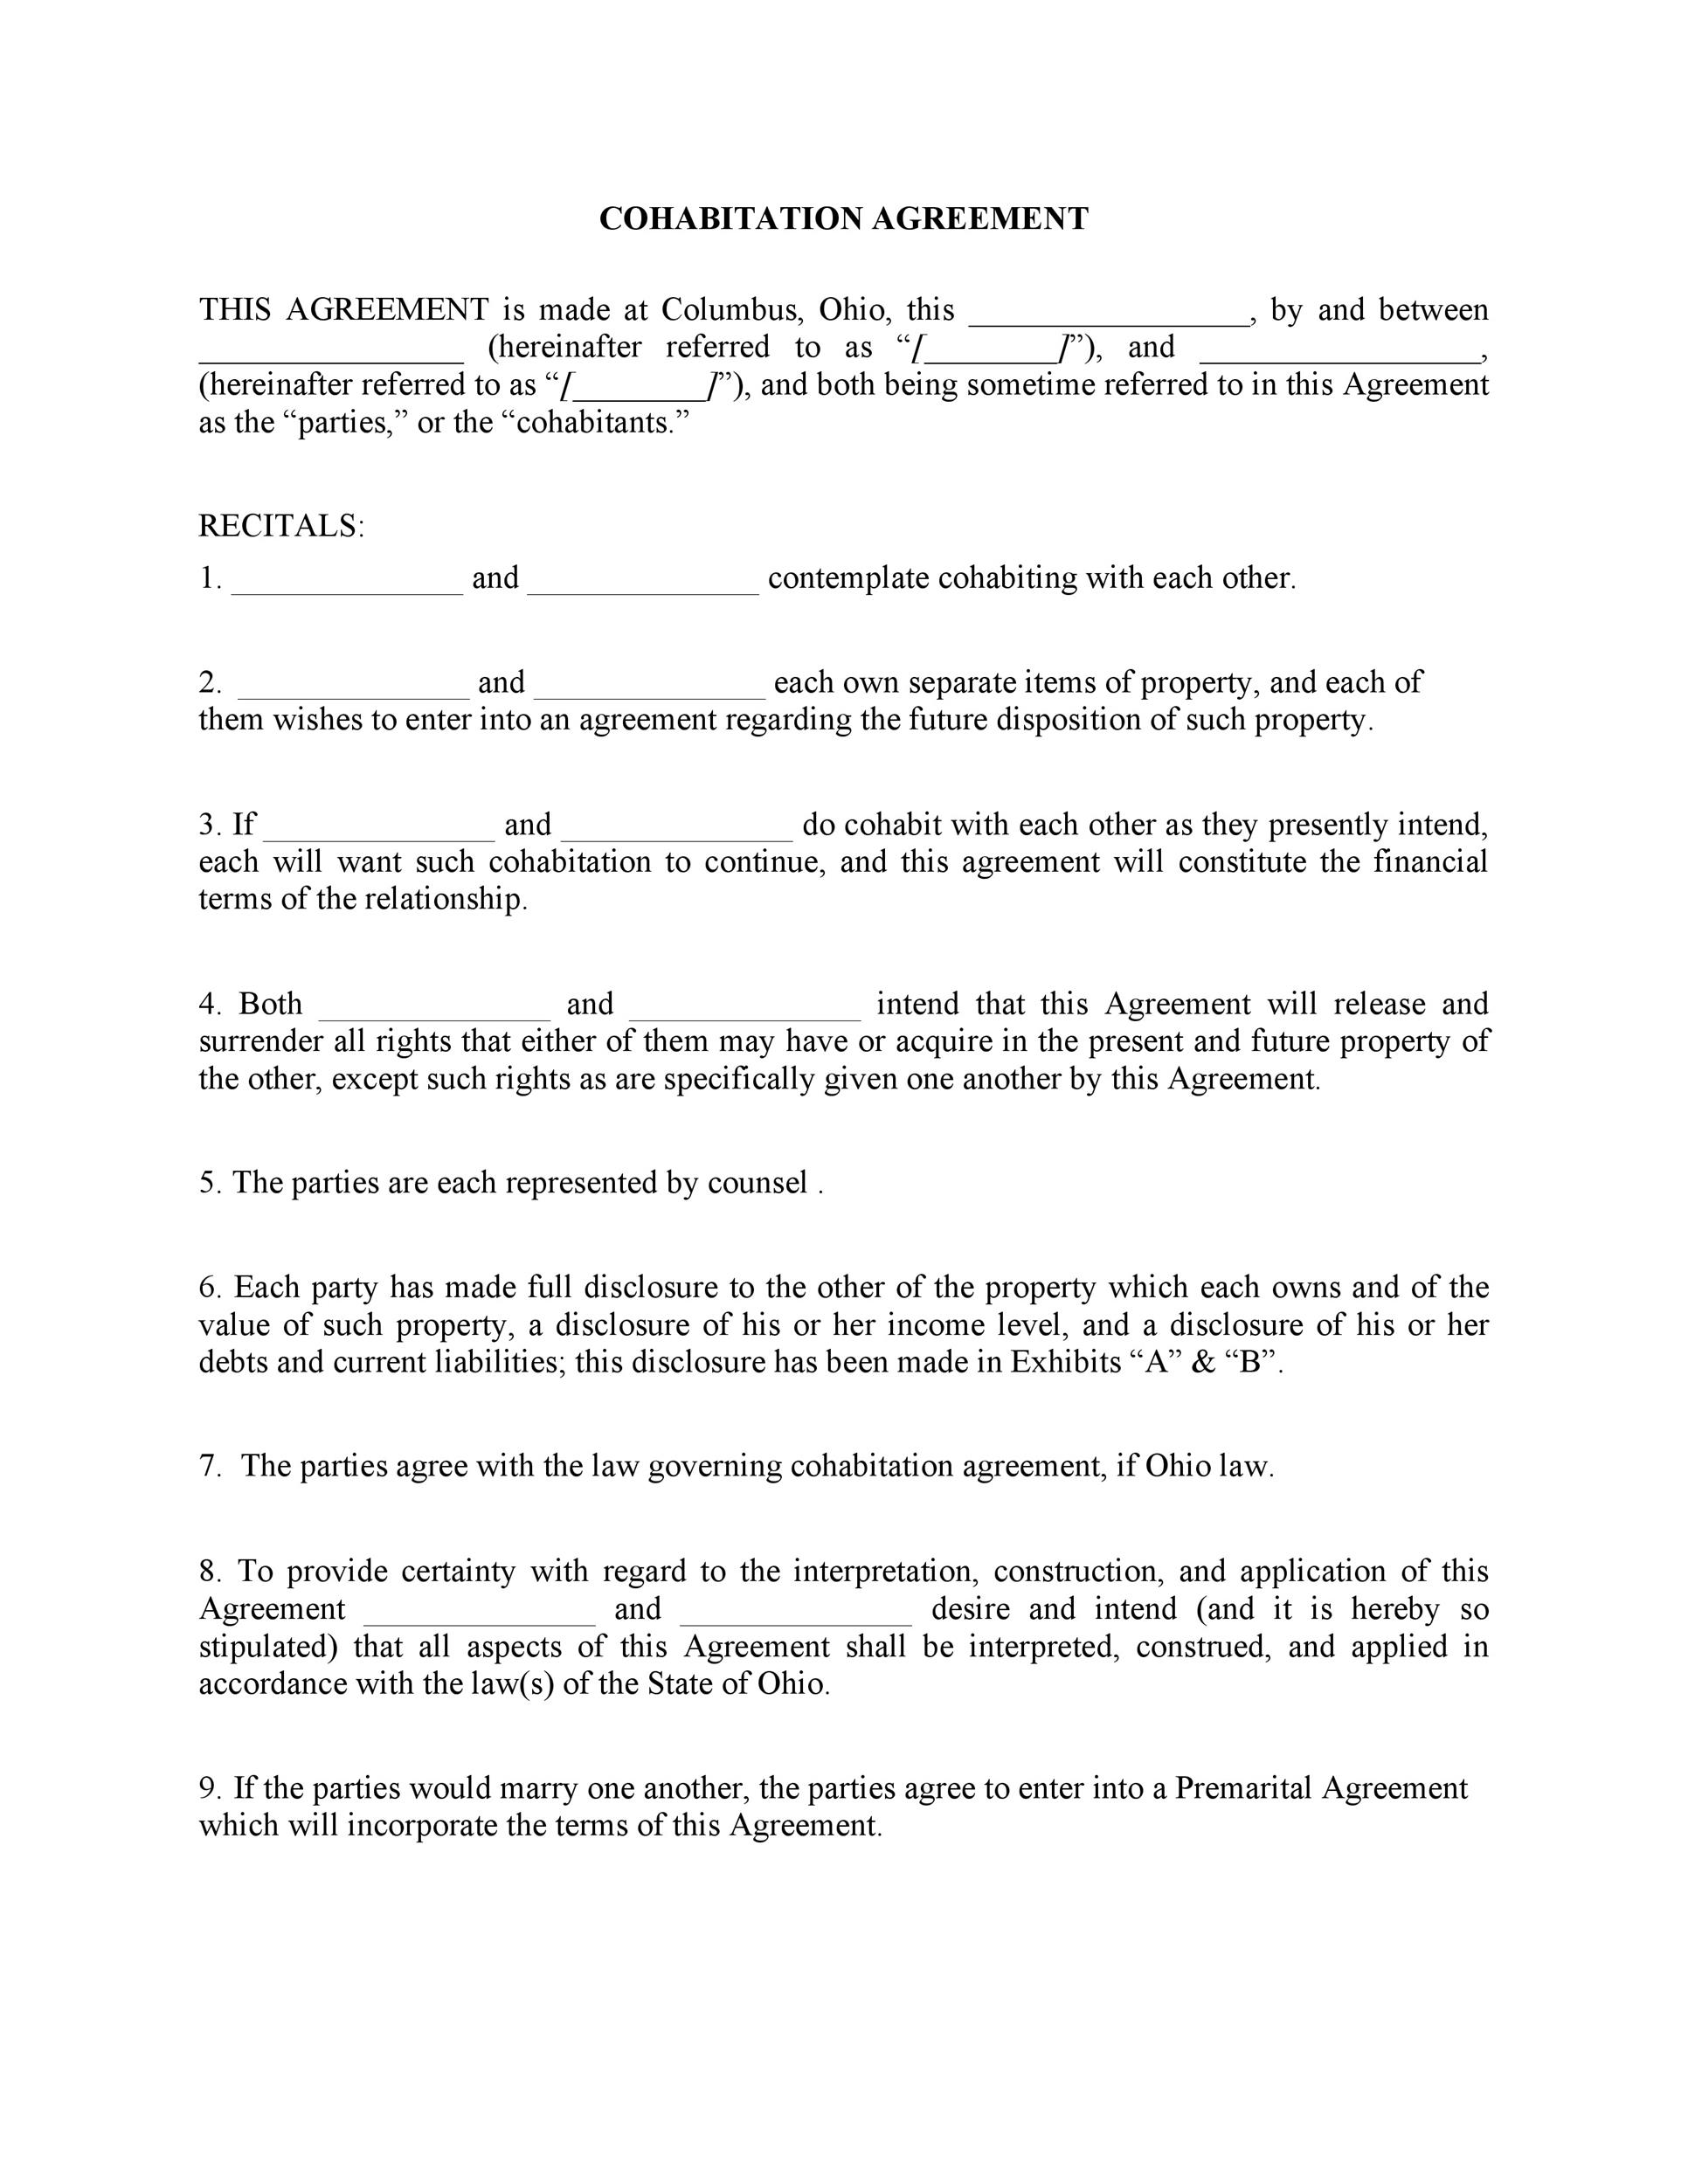 Free cohabitation agreement template 06